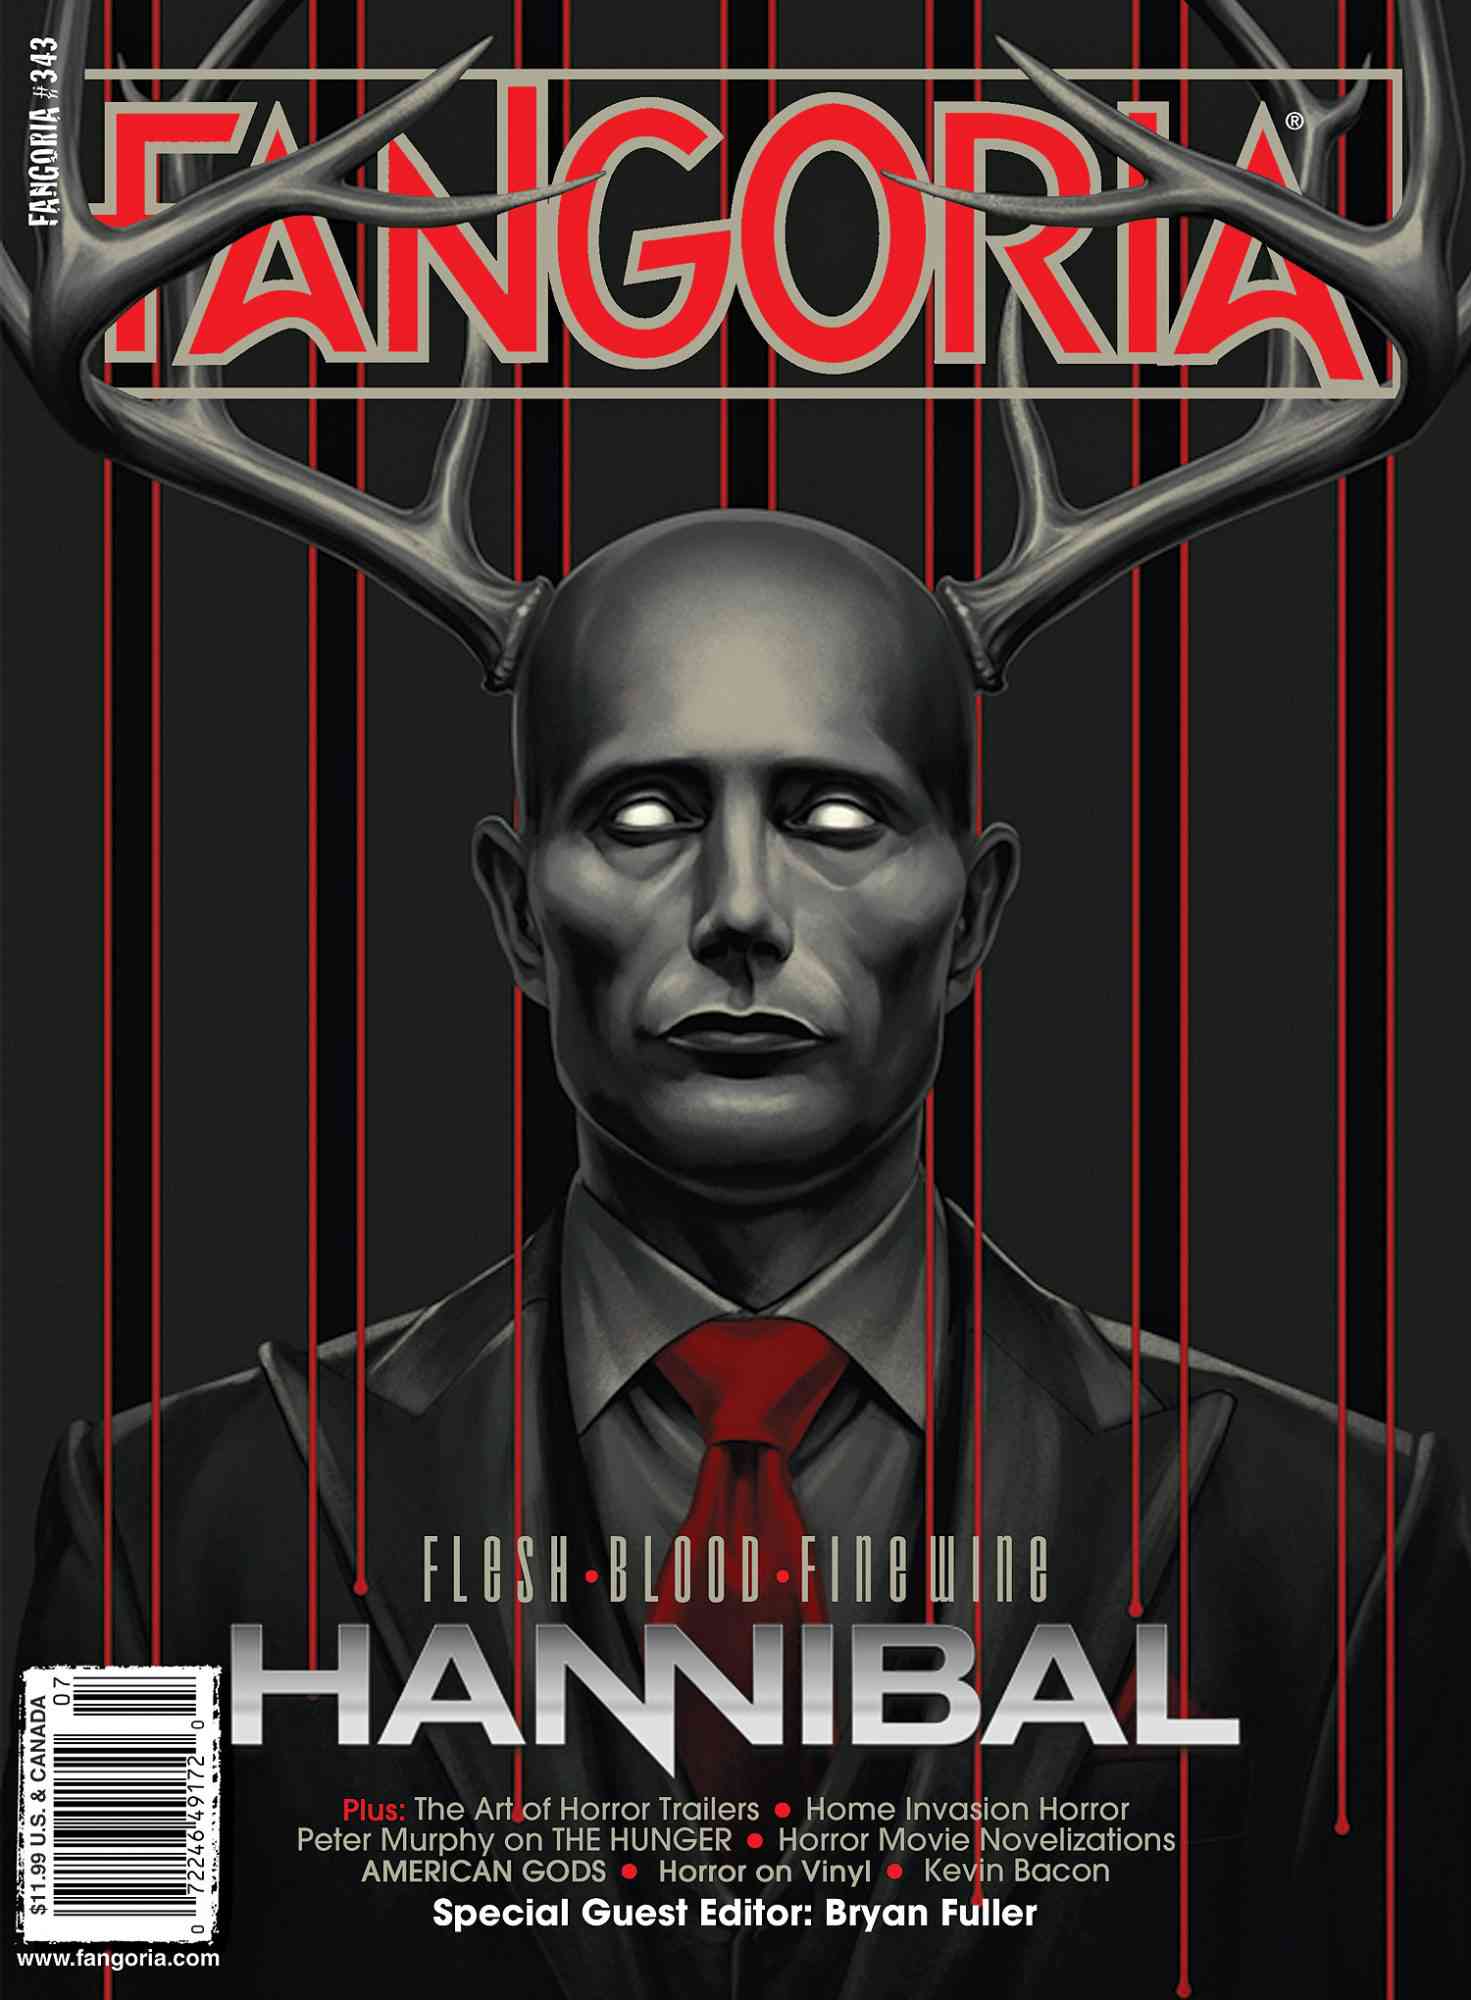 Hannibal creator Bryan Fuller guest edits Fangoria horror magazine | EW.com